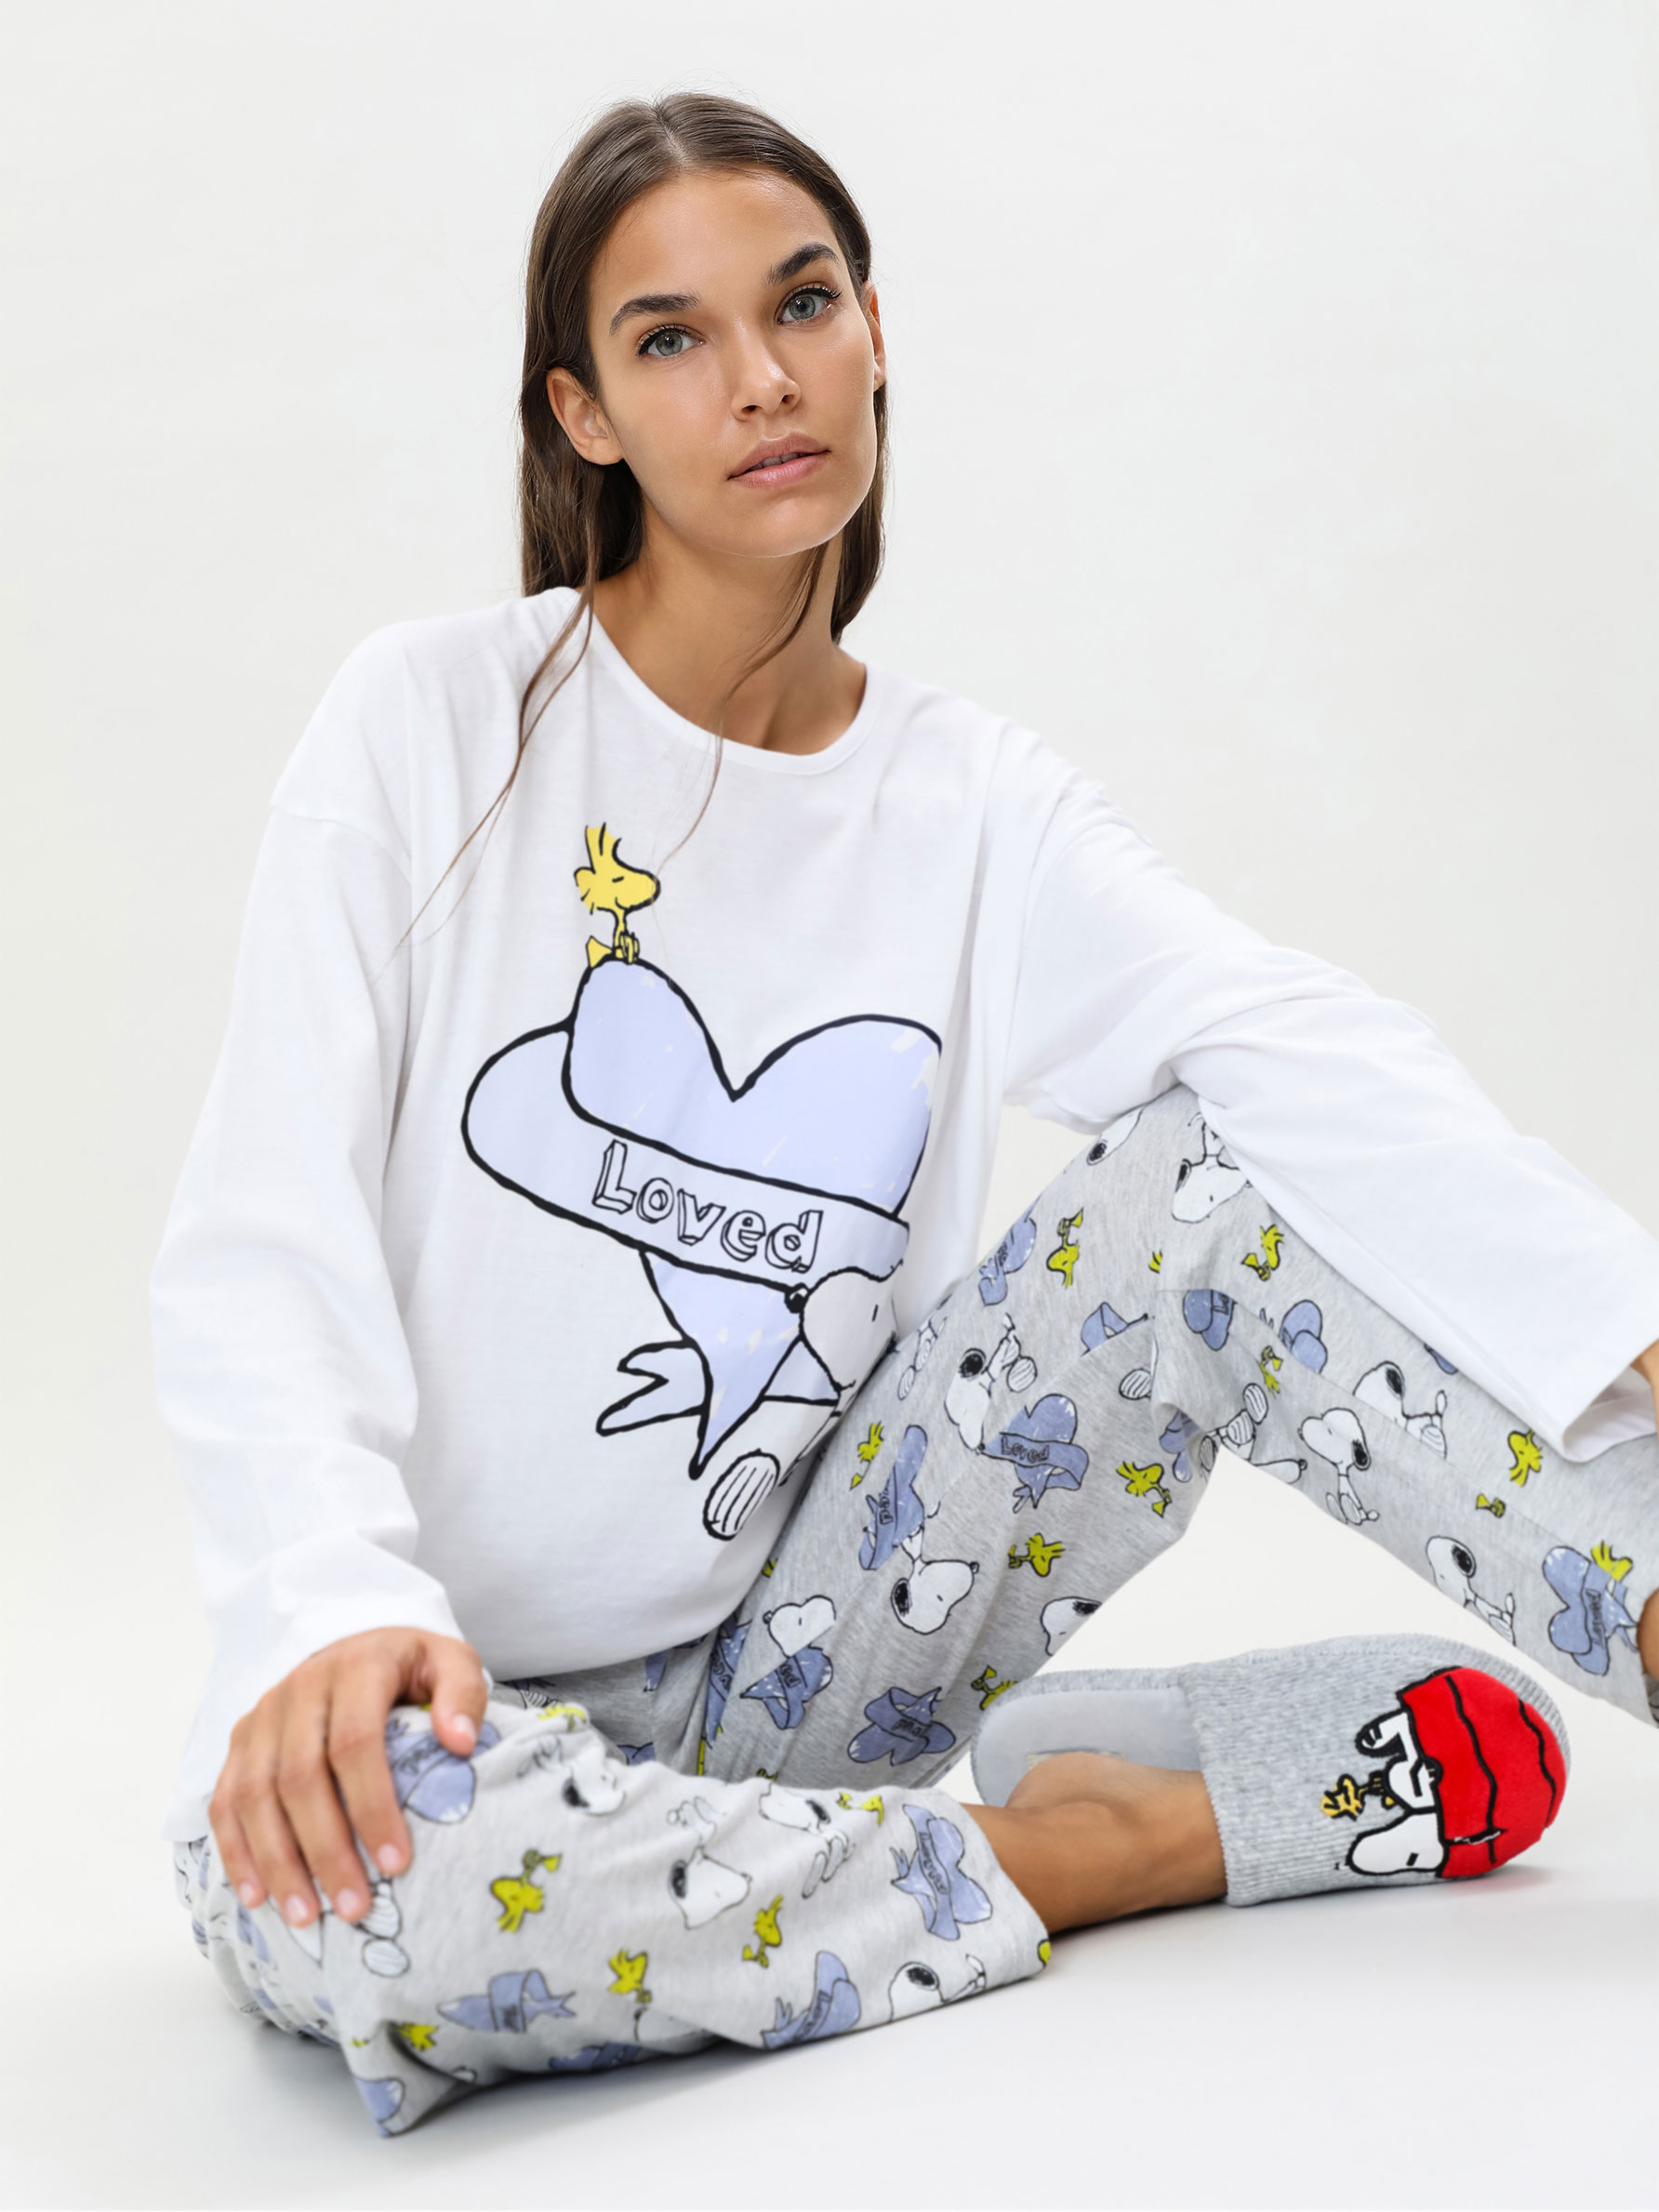 Zuidoost Leggen emulsie Snoopy - Peanuts™ pyjama set - Peanuts™ - COLLABS - THE ENTIRE COLLECTION -  WOMAN - | Lefties Bahrain